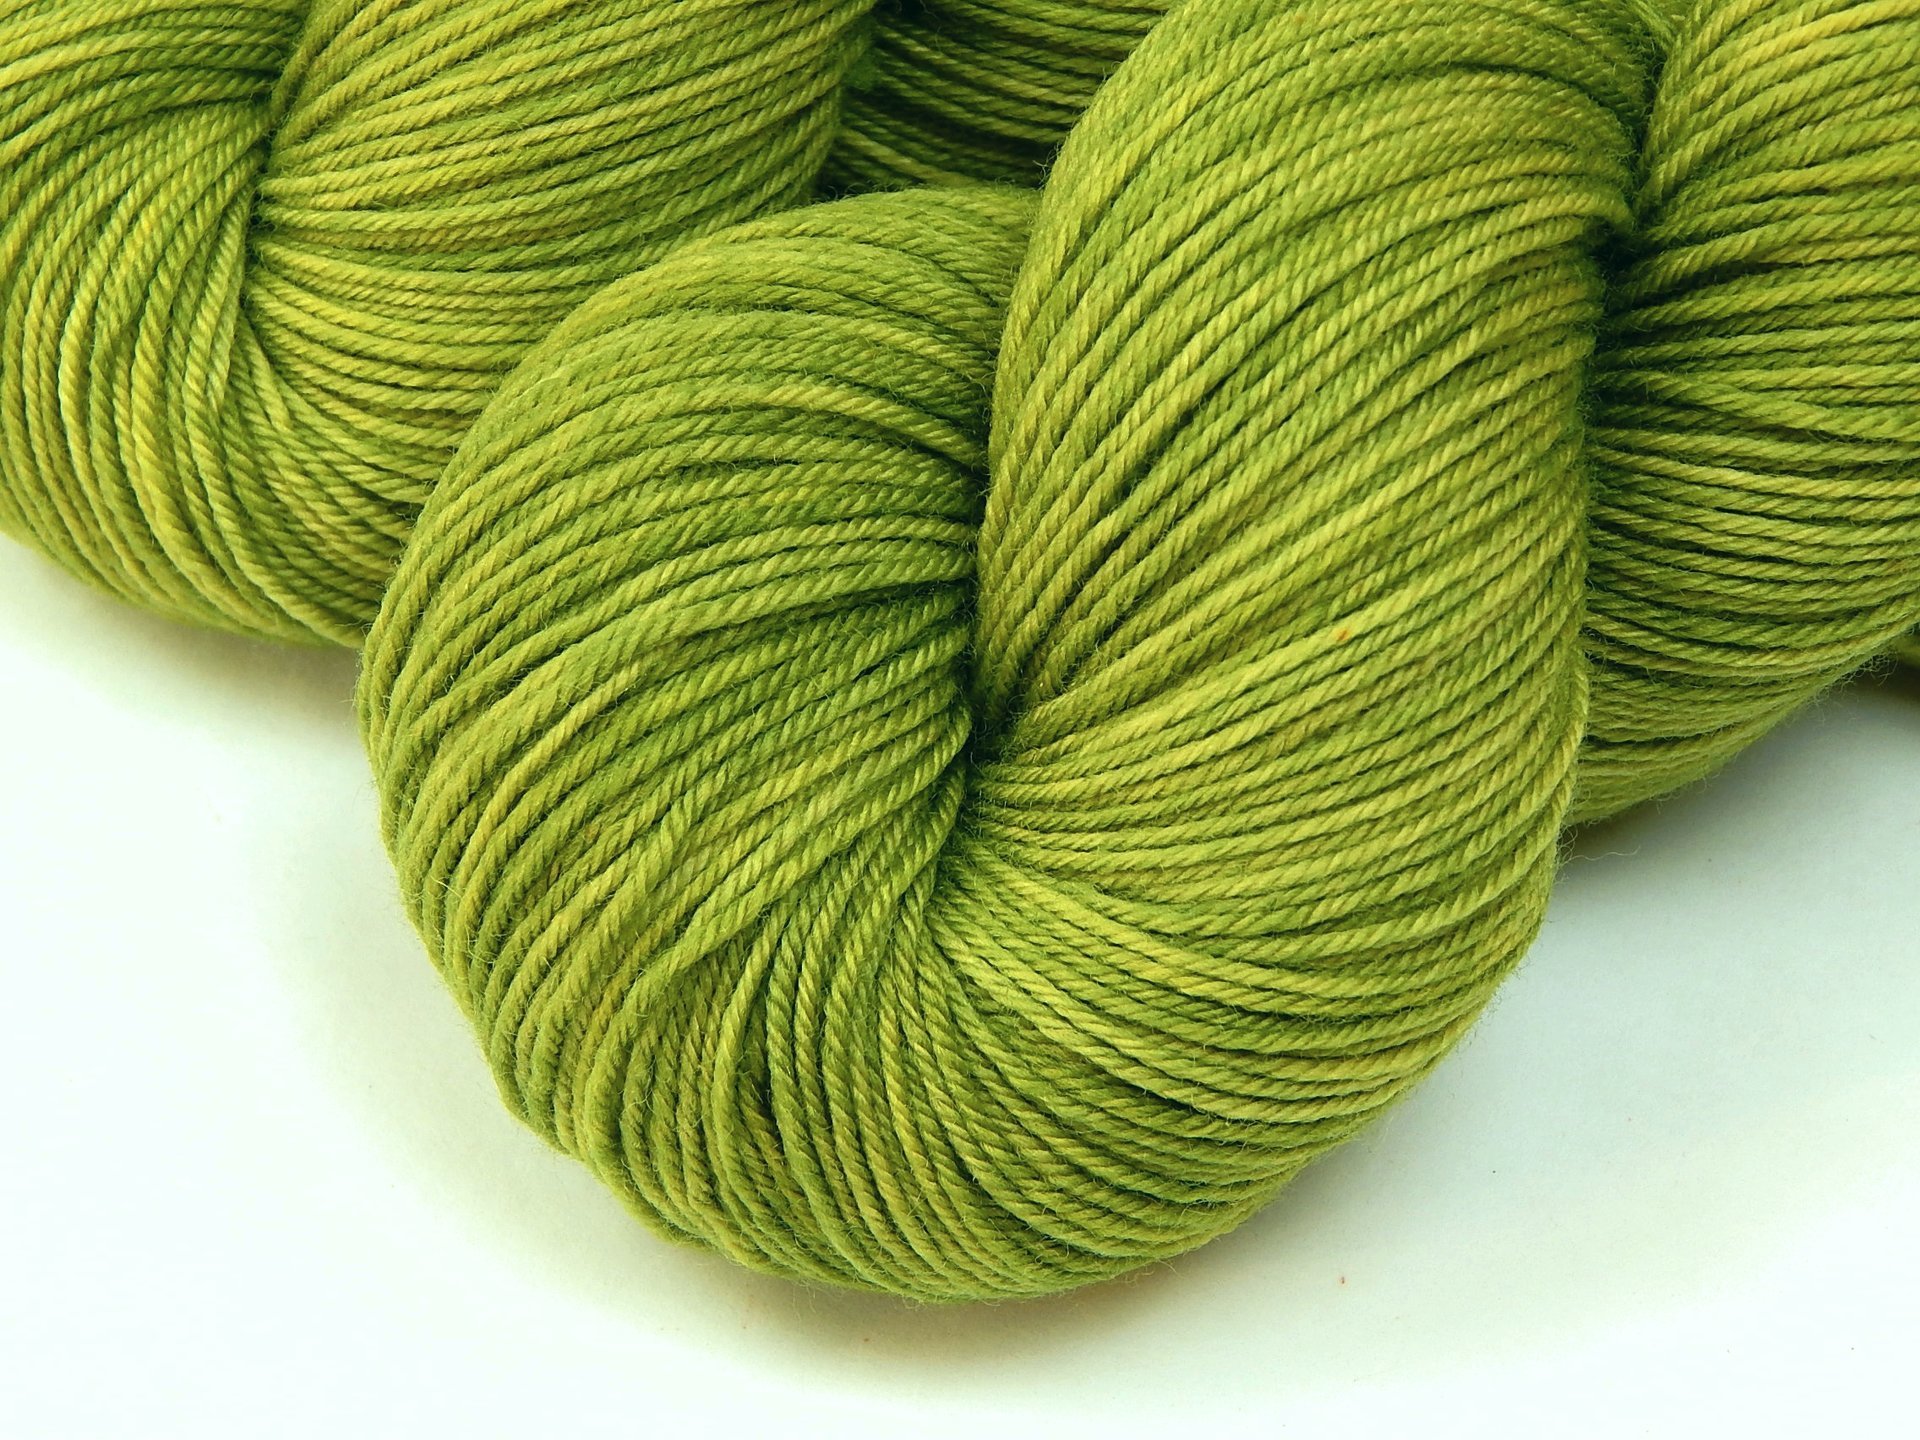 Hand Dyed Yarn, Sock Fingering Weight 4 Ply Superwash Merino Wool Yarn - Lettuce Tonal - Indie Dyer Knitting Yarn, Yellow Green Lime